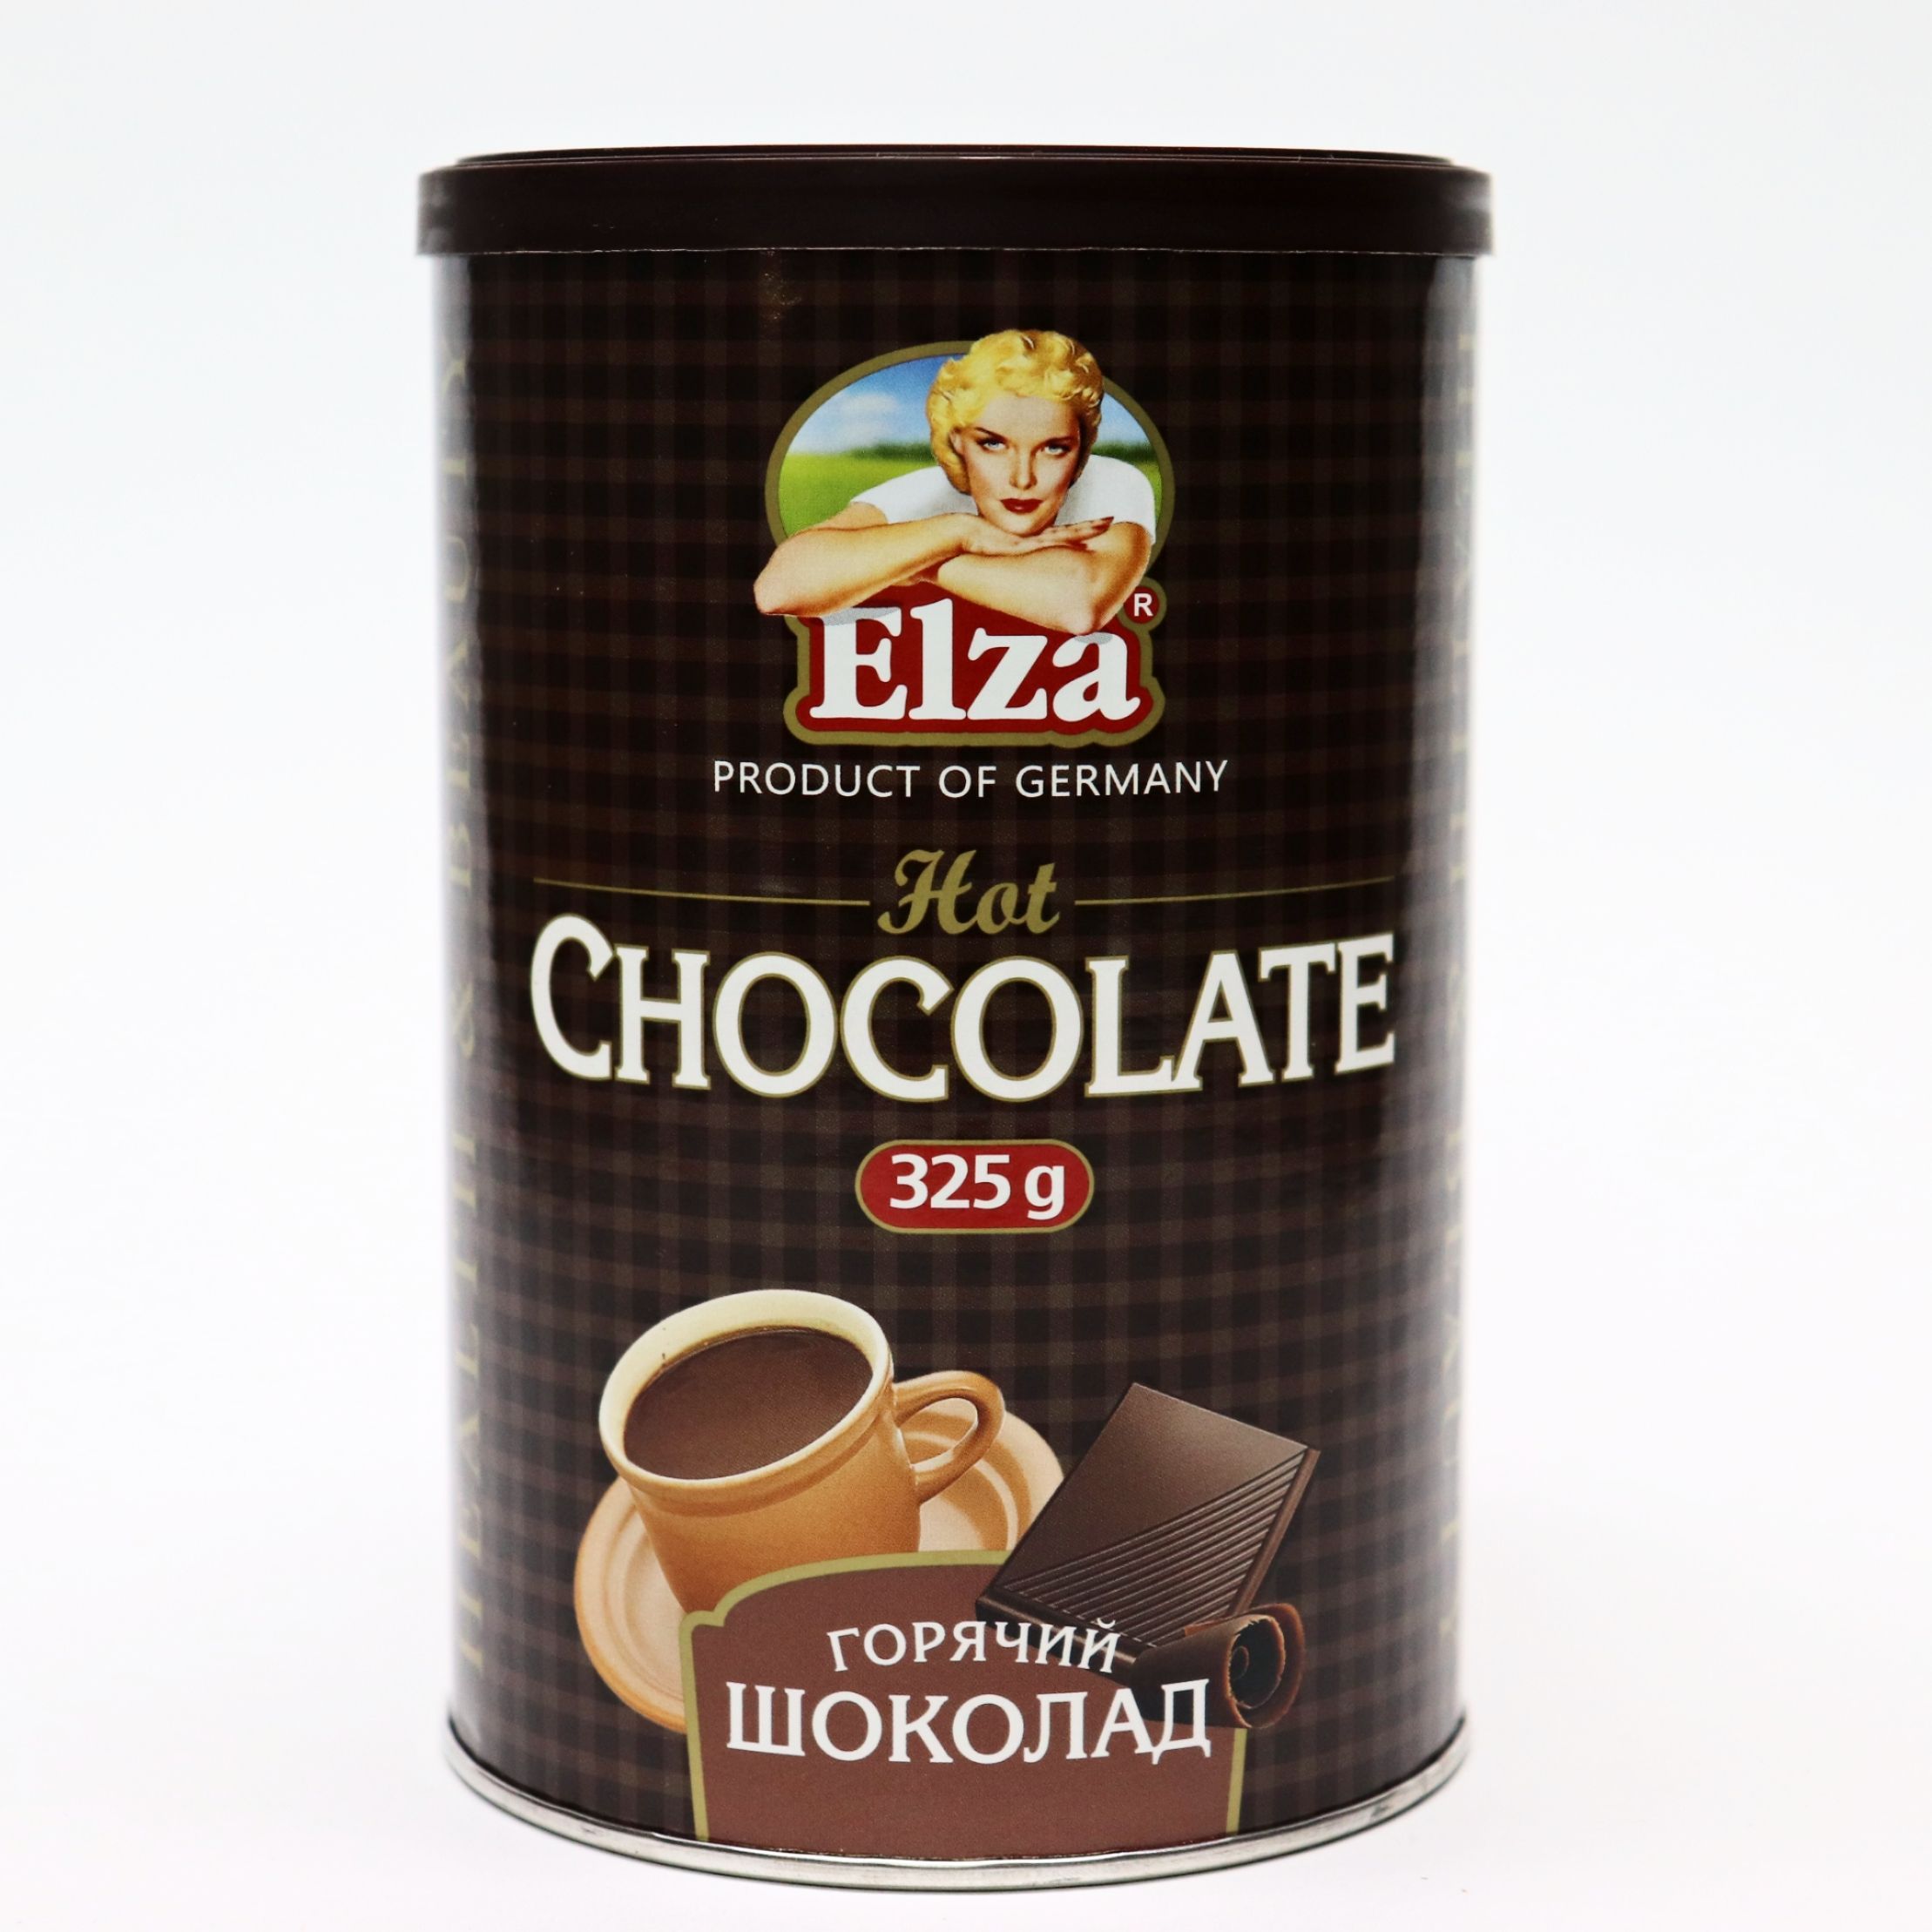 Горячий шоколад elza. Горячий шоколад растворимый Elza Choco Band. Горячий шоколад Elza, 325 гр.